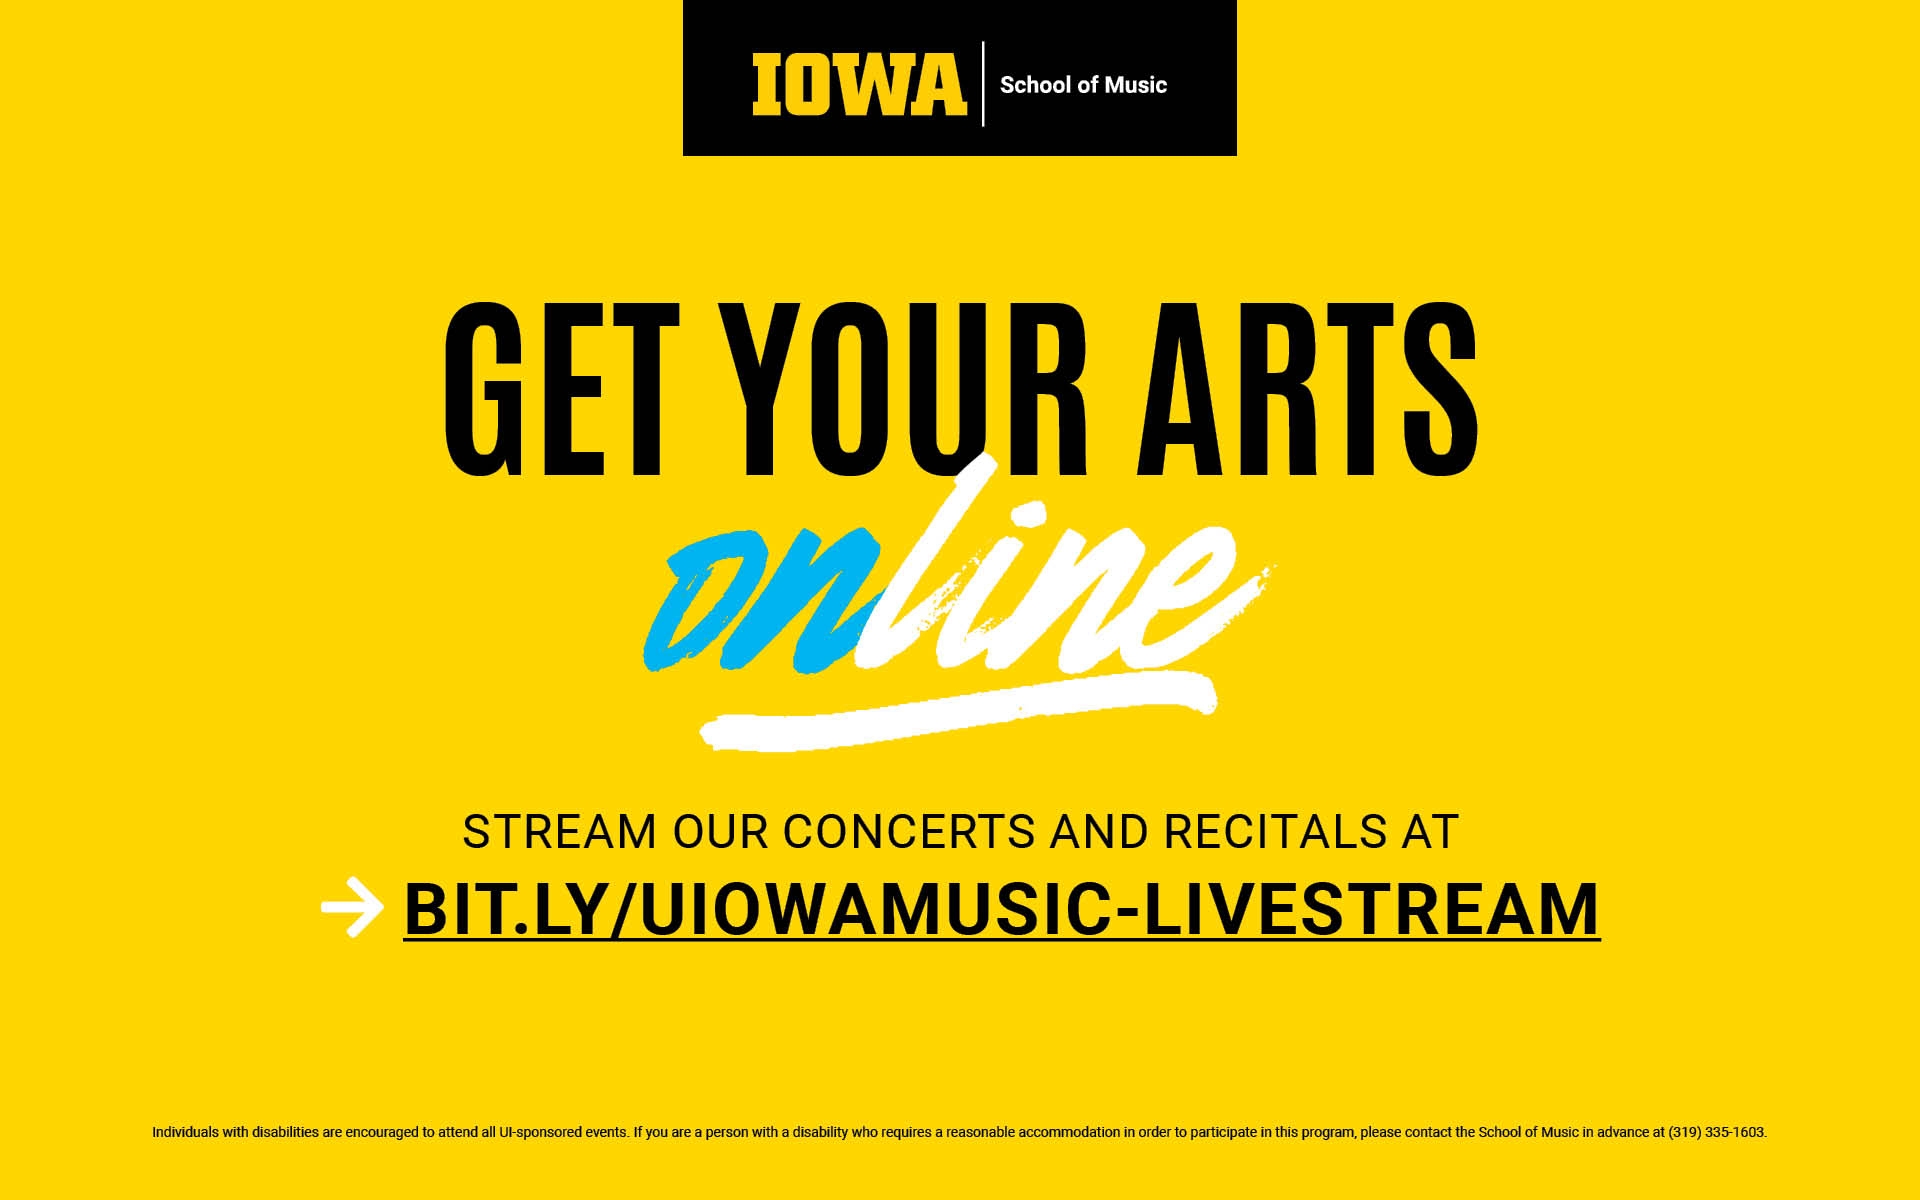 Get your arts online https://bit.ly/uiowamusic-livestream